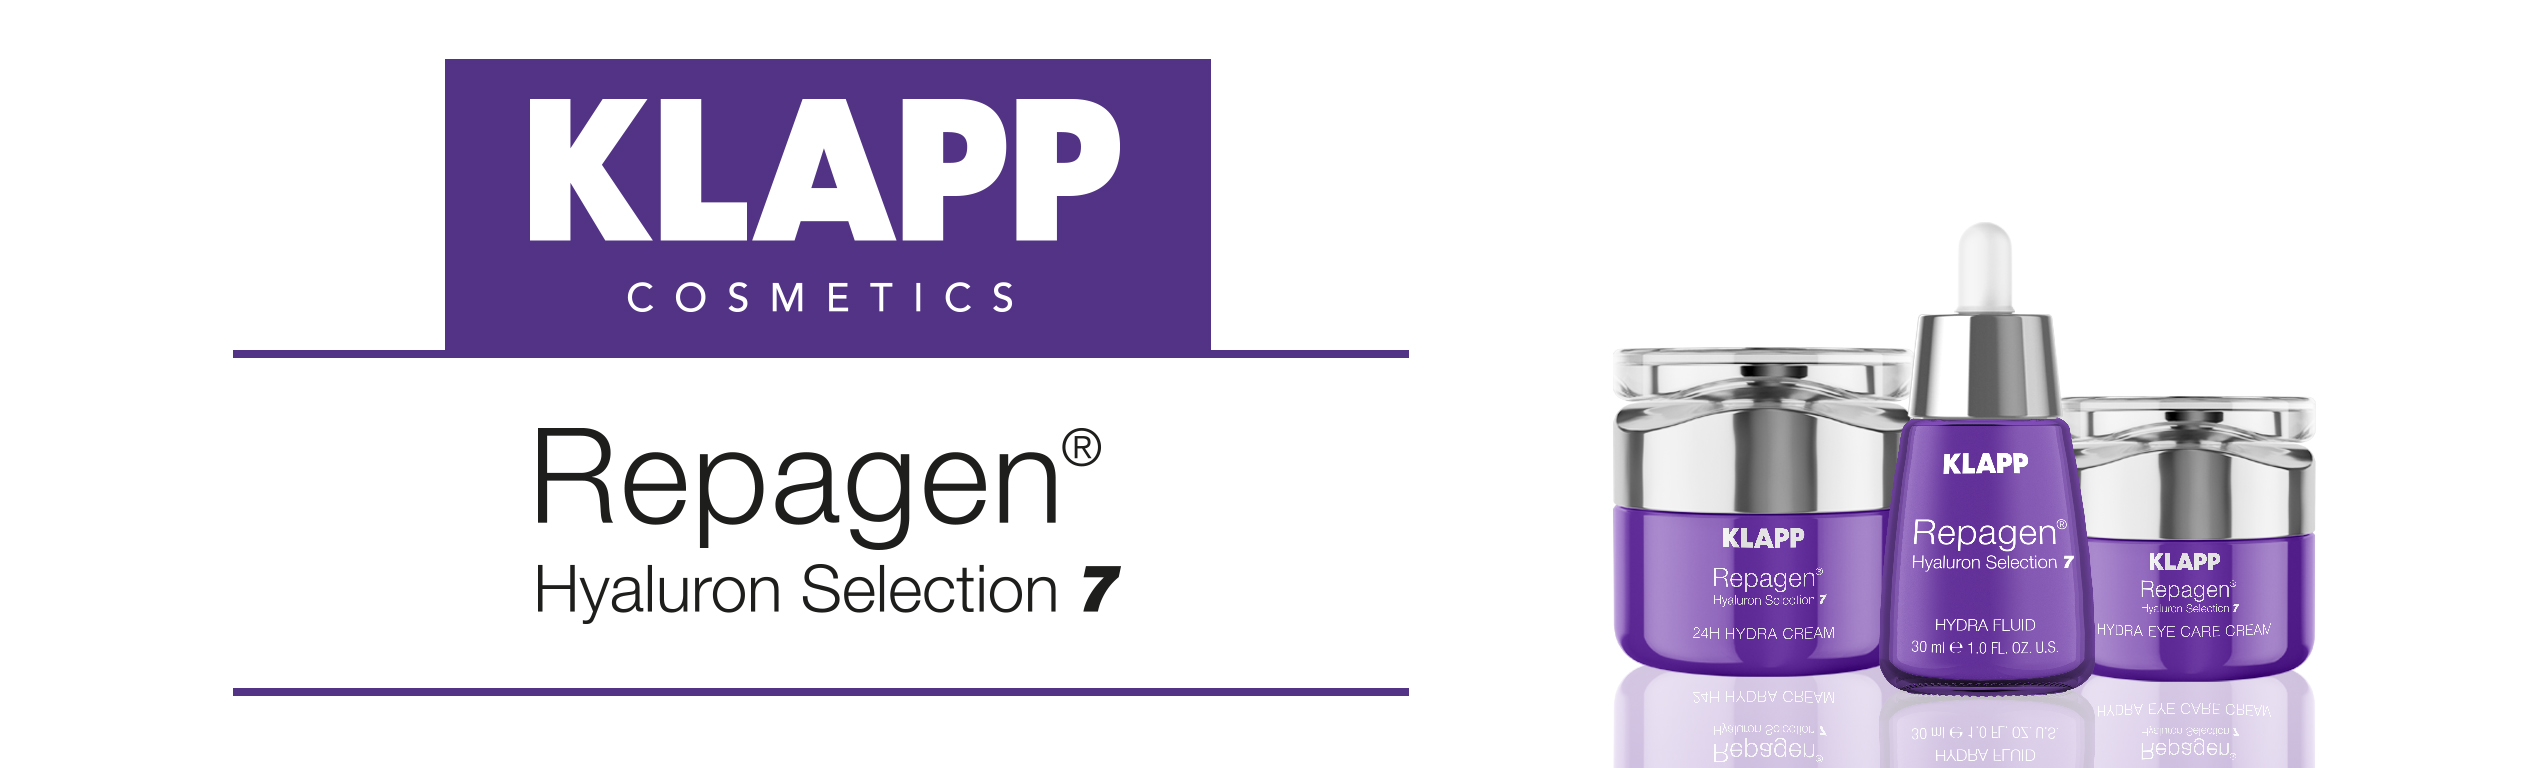 Repagen Hyaluron Selection 7